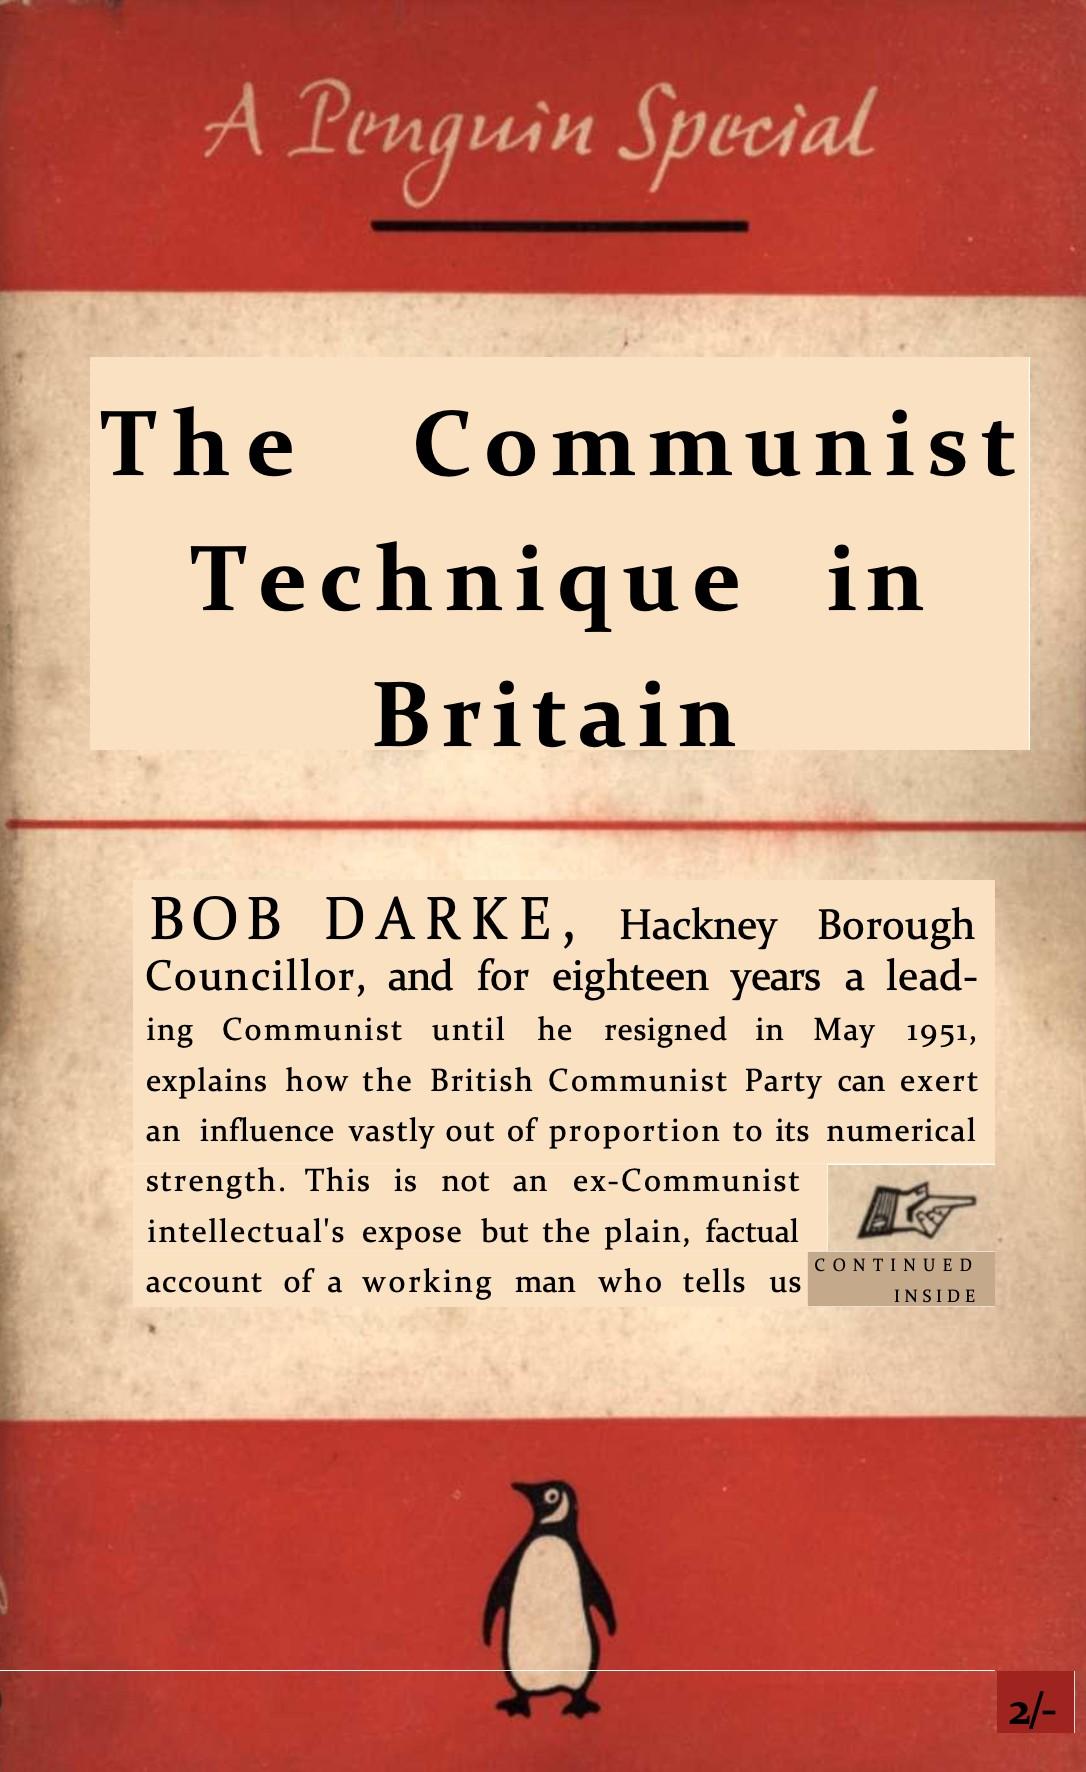 The Communist Technique in Britain (1952) by Bob Darke